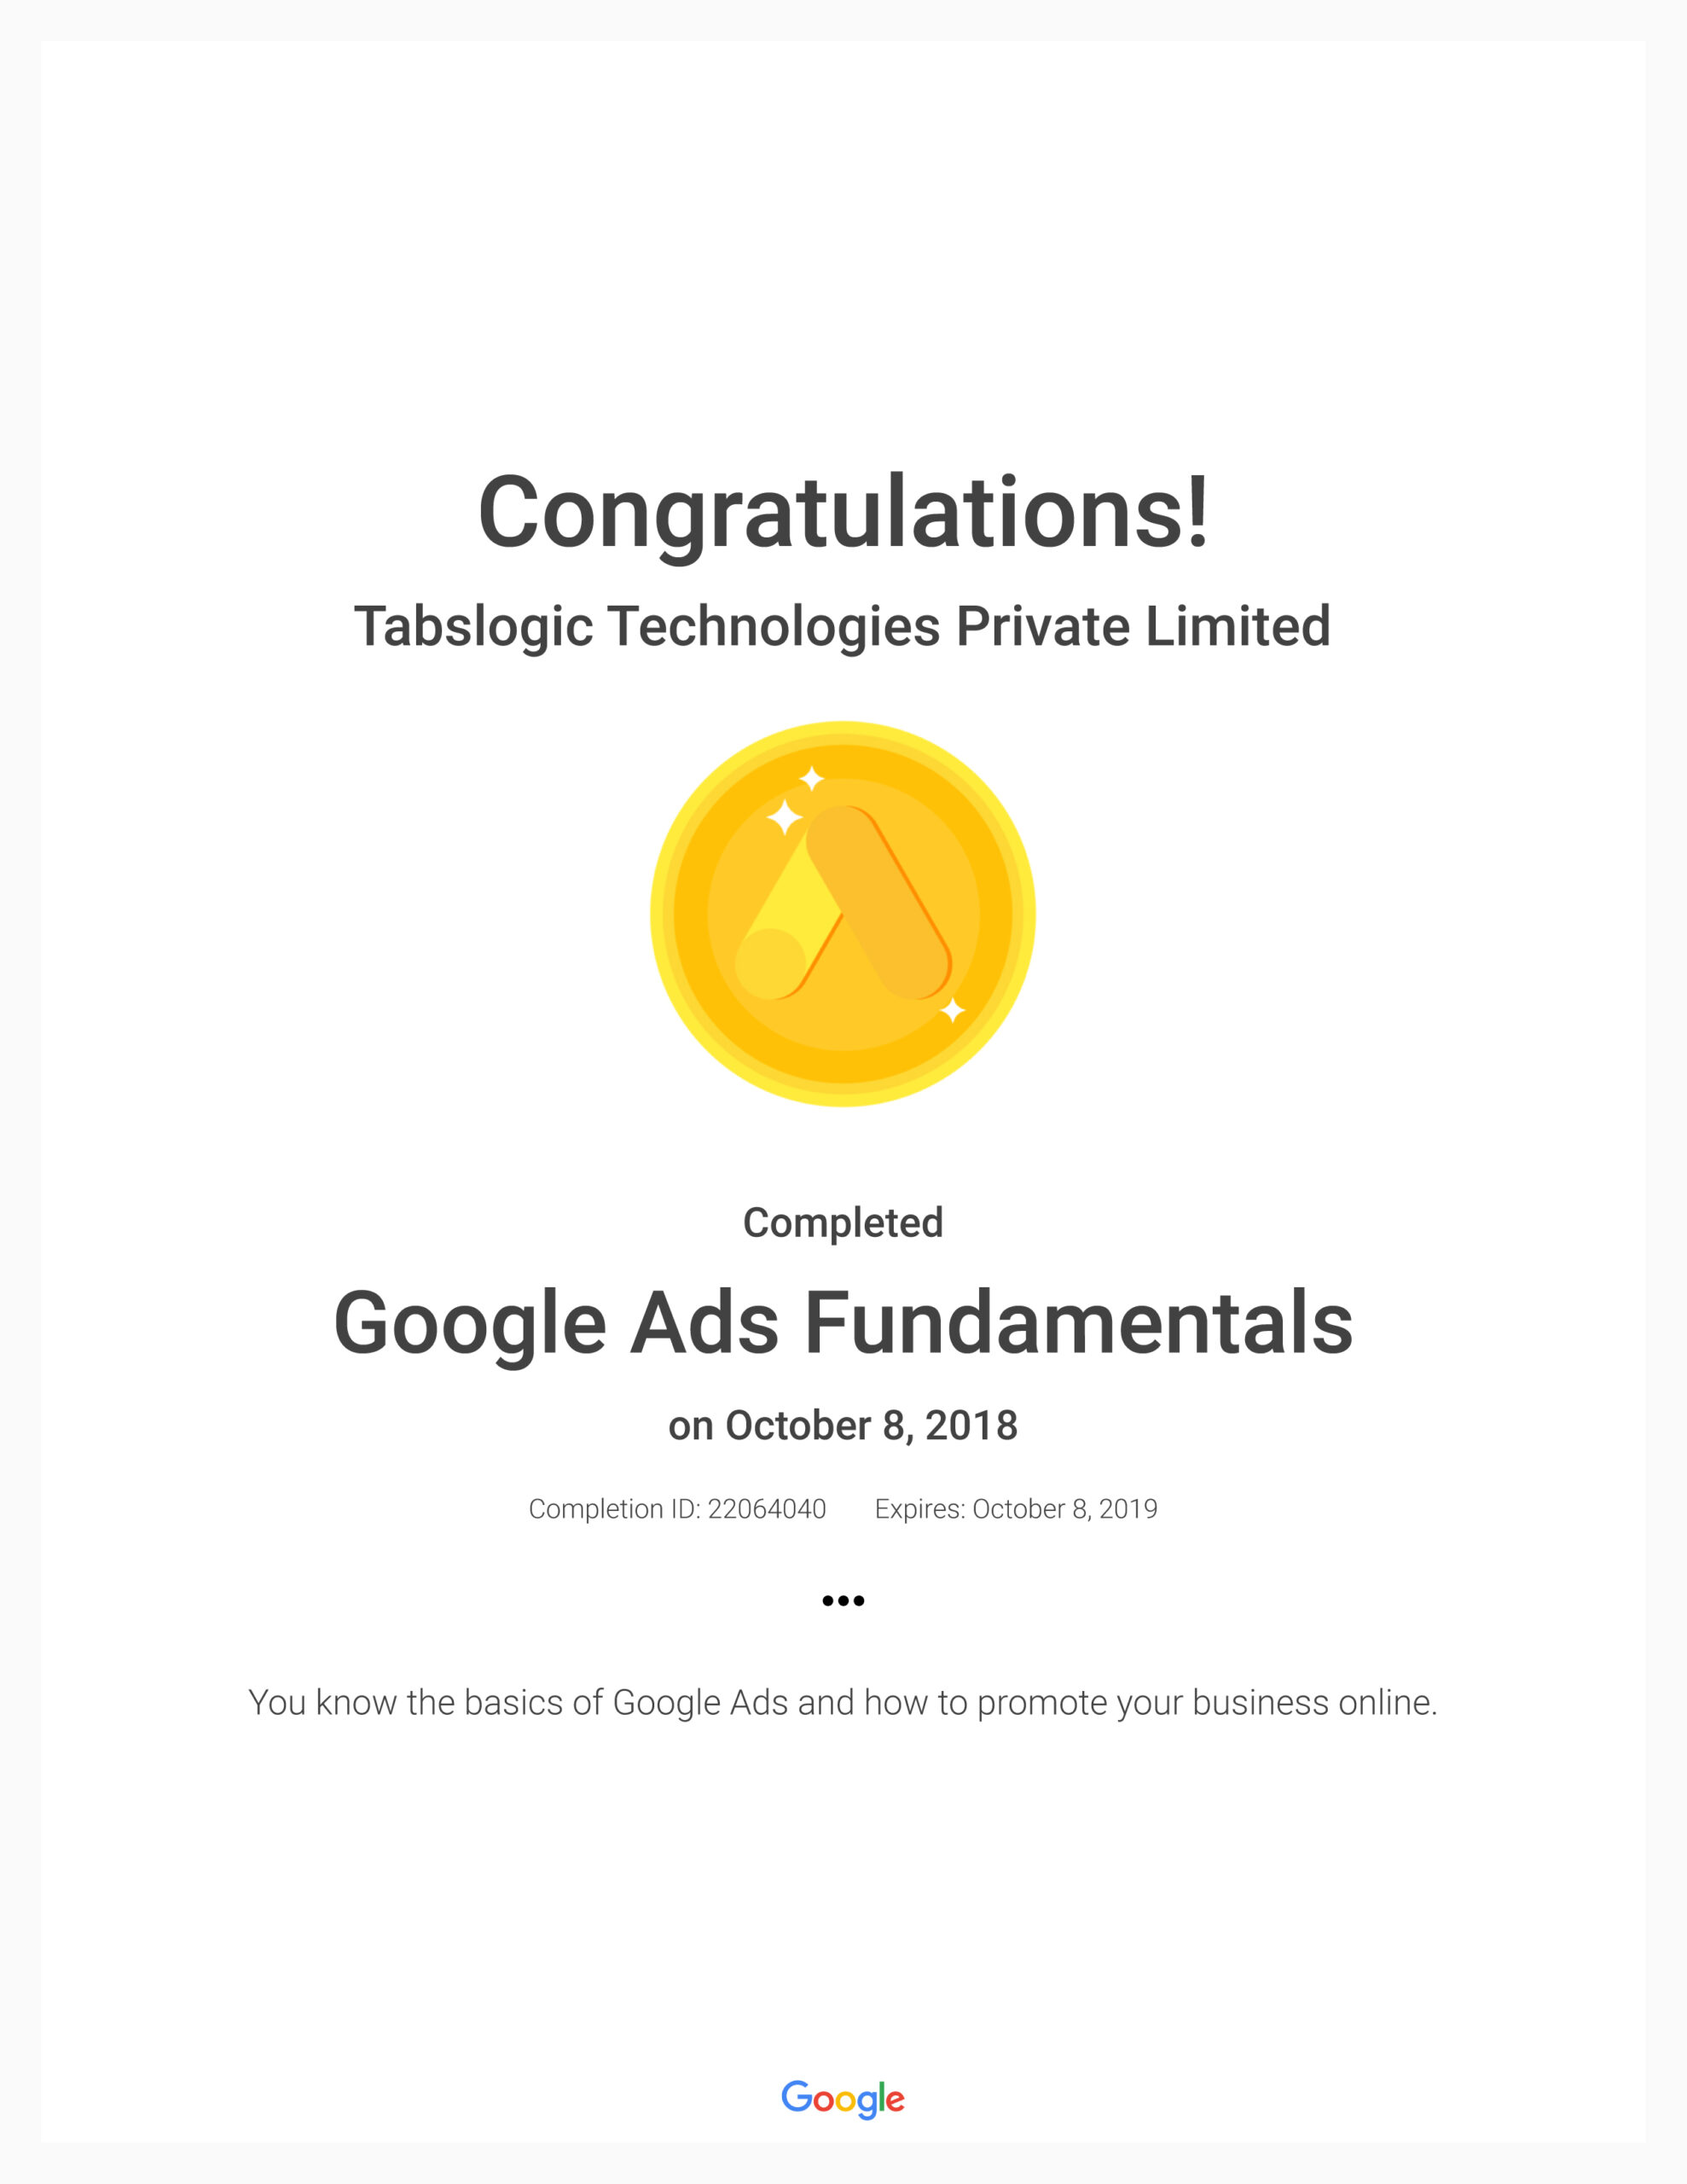 Google Ads Fundamentals